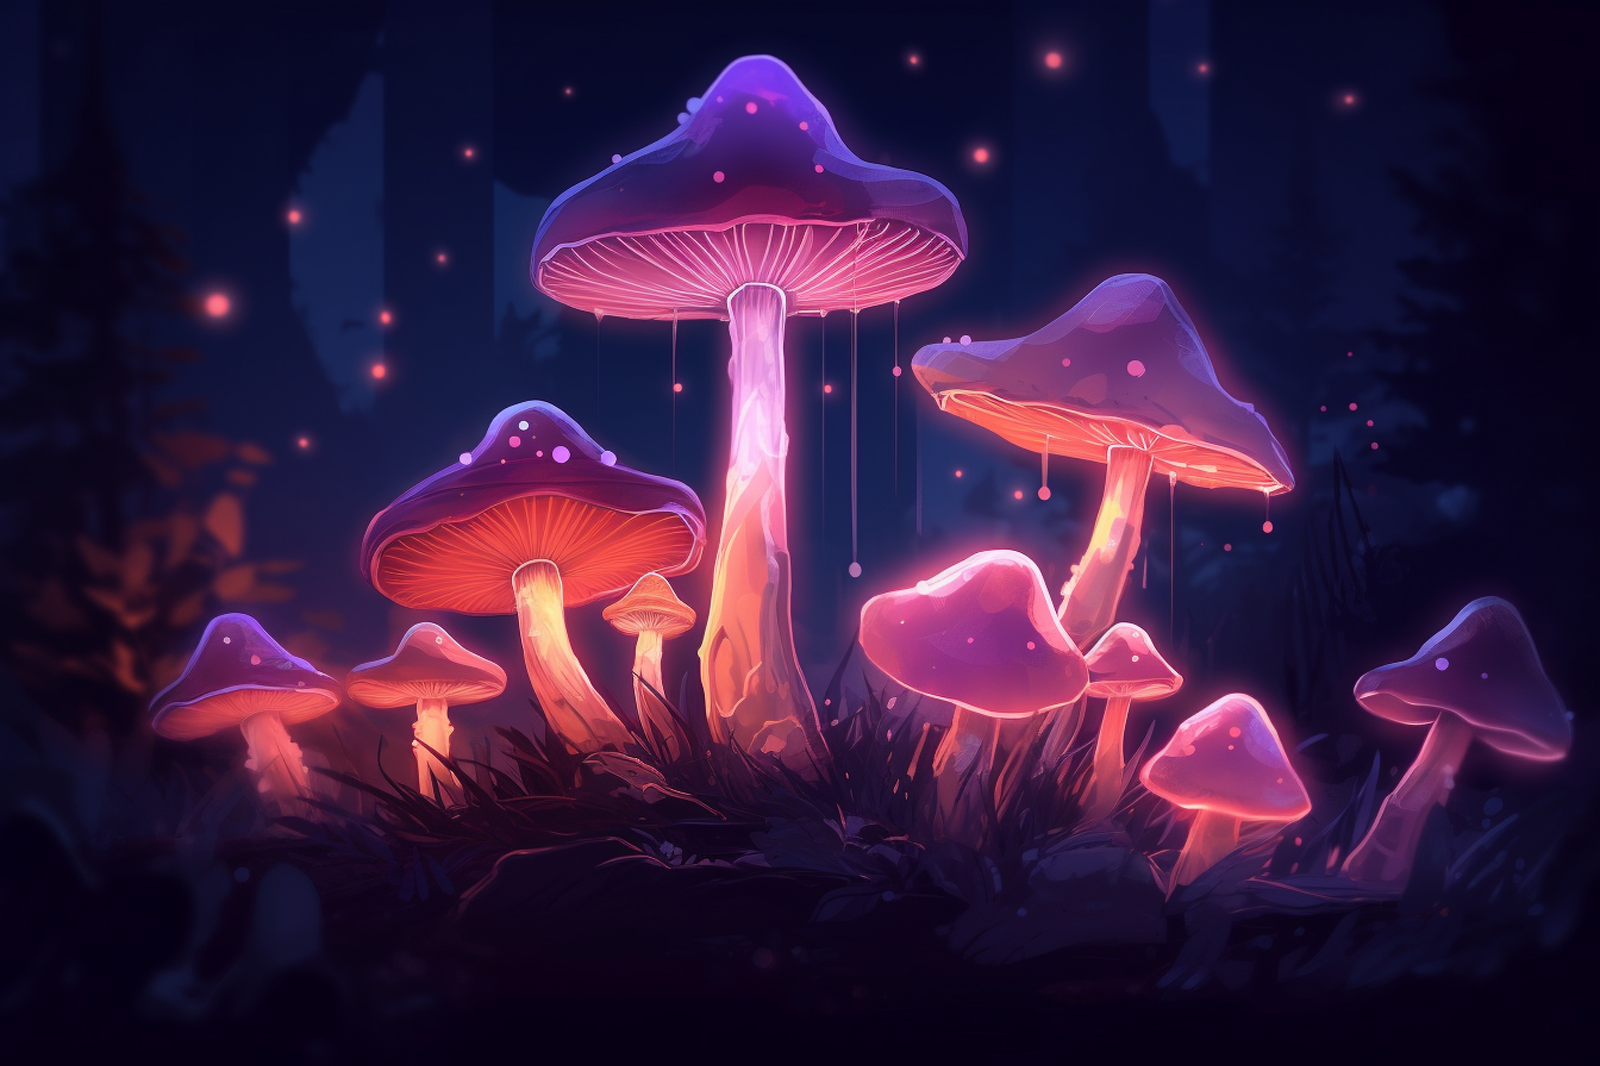 Glowing mushrooms of various sizes in a dark jungle, casting an enchanting reddish light